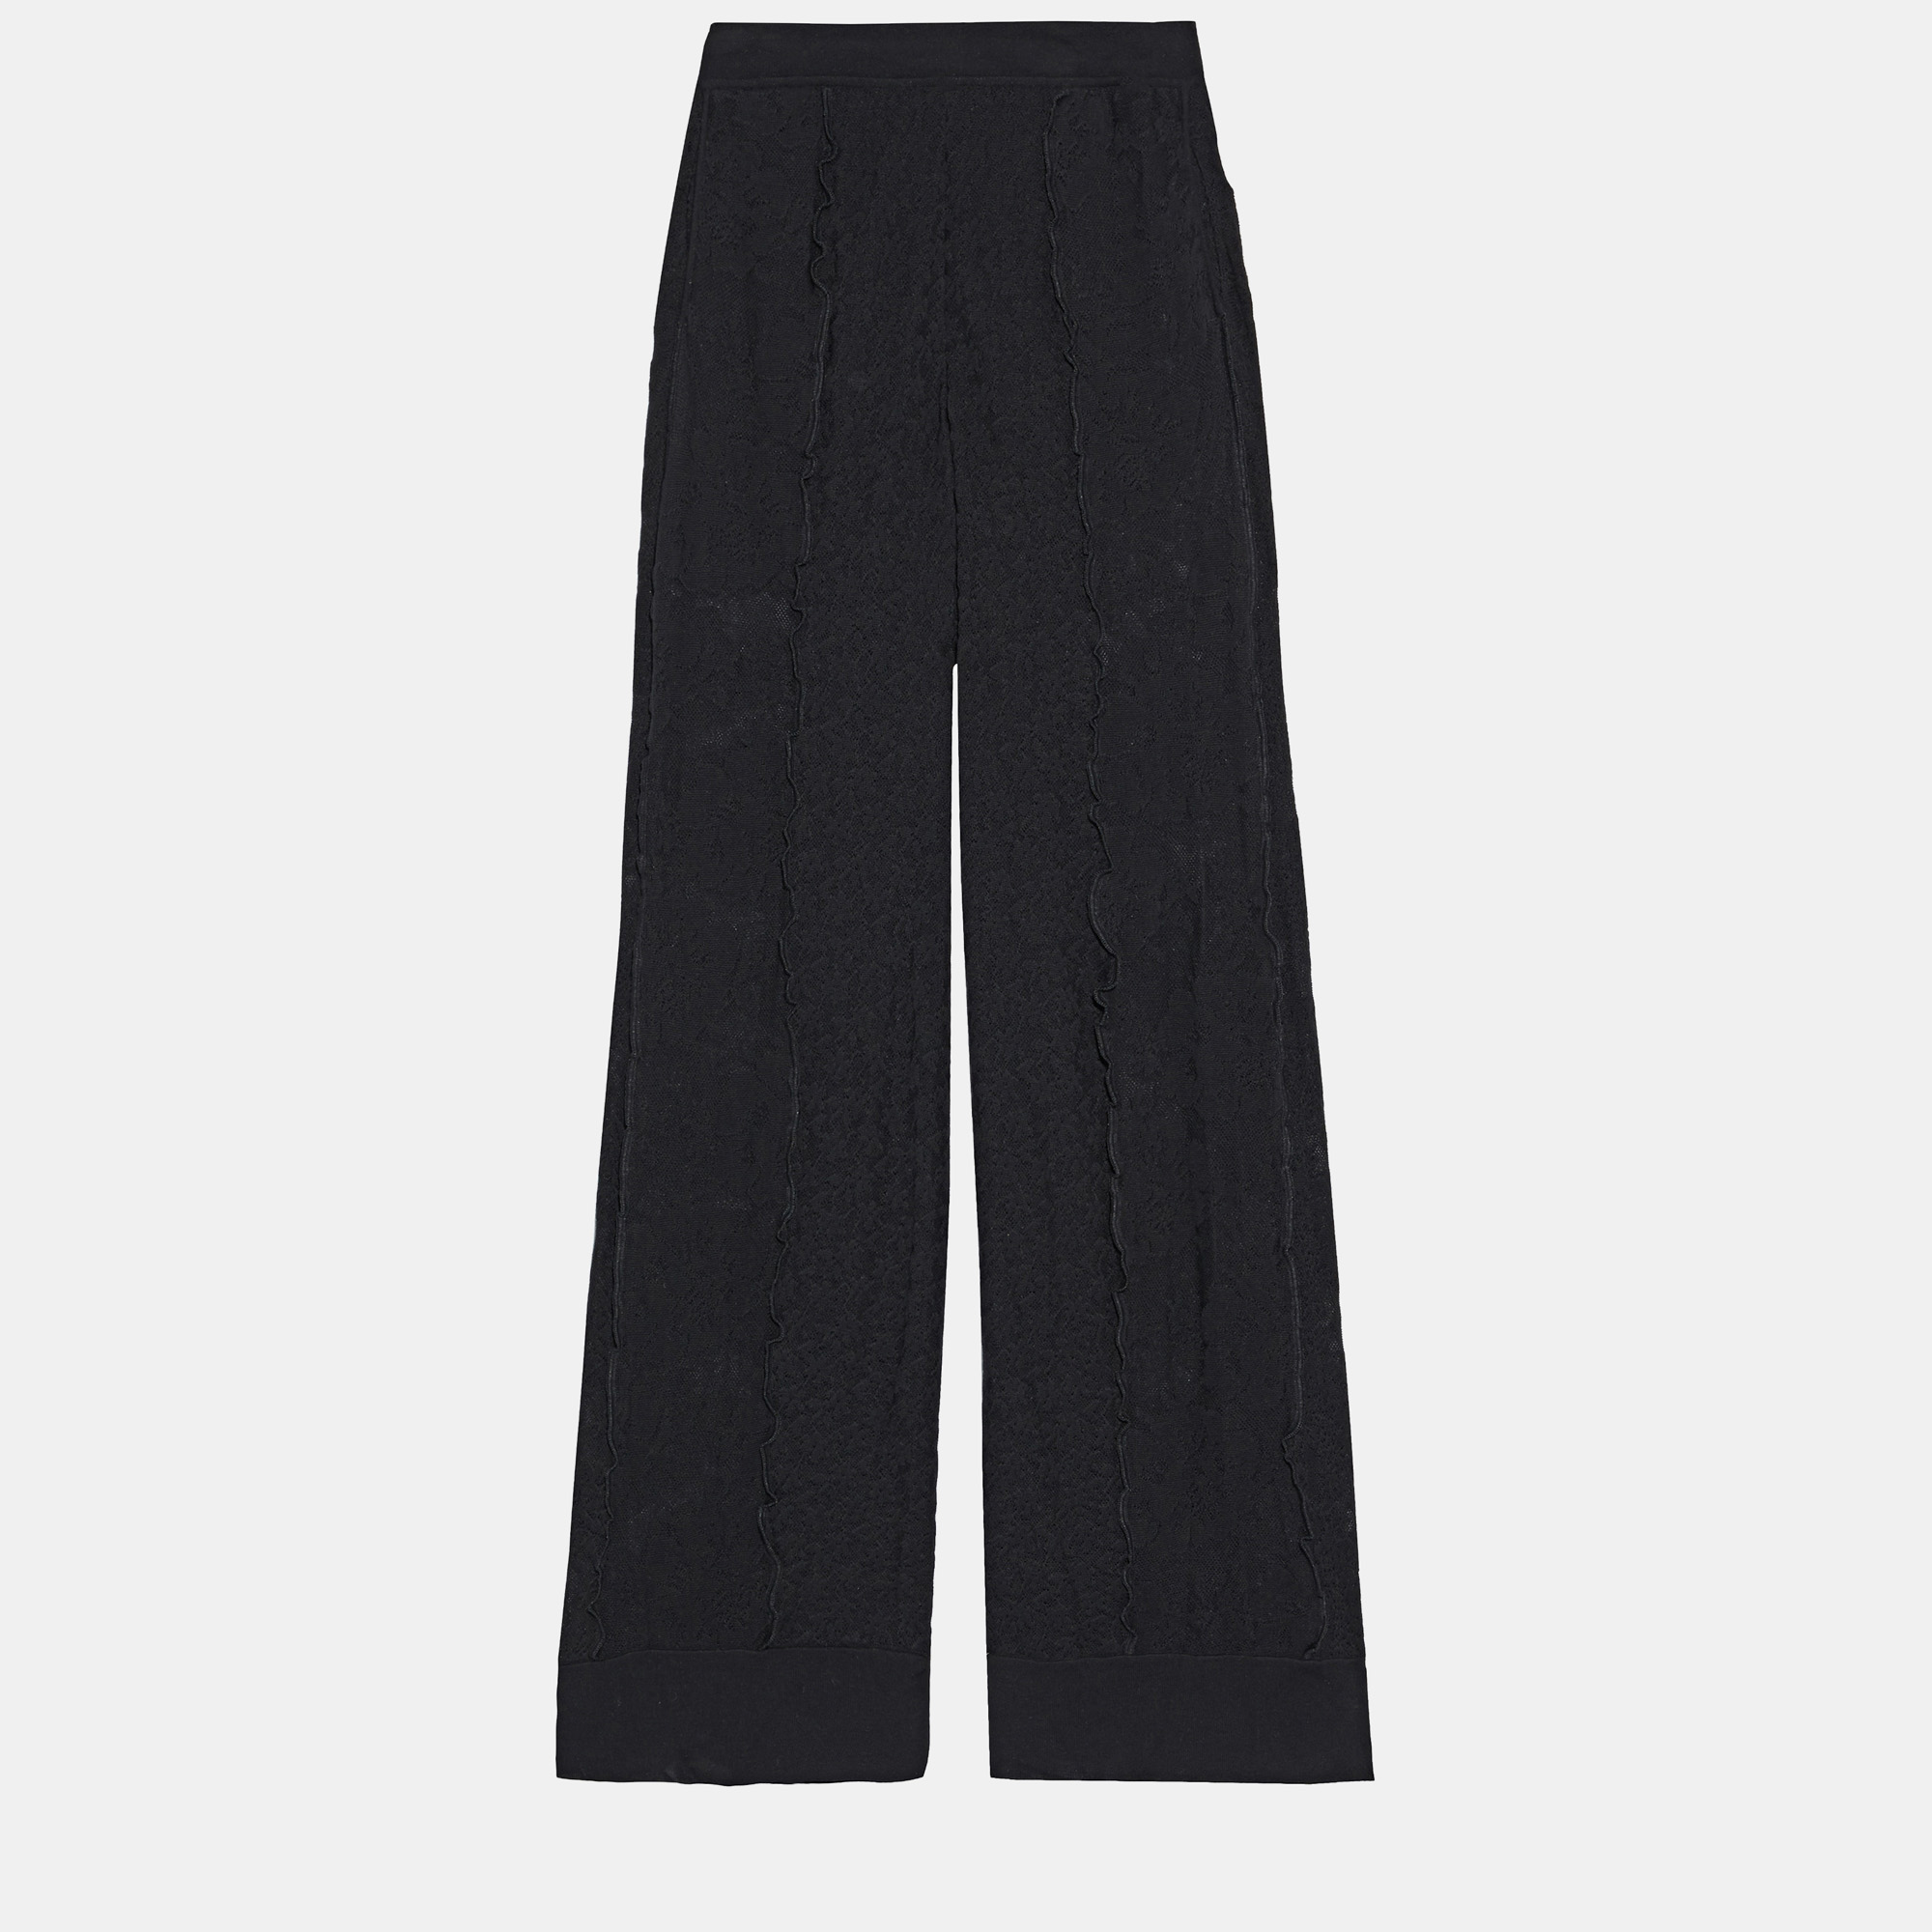 Stella mccartney black patterned knit wide leg pants m (it 42)